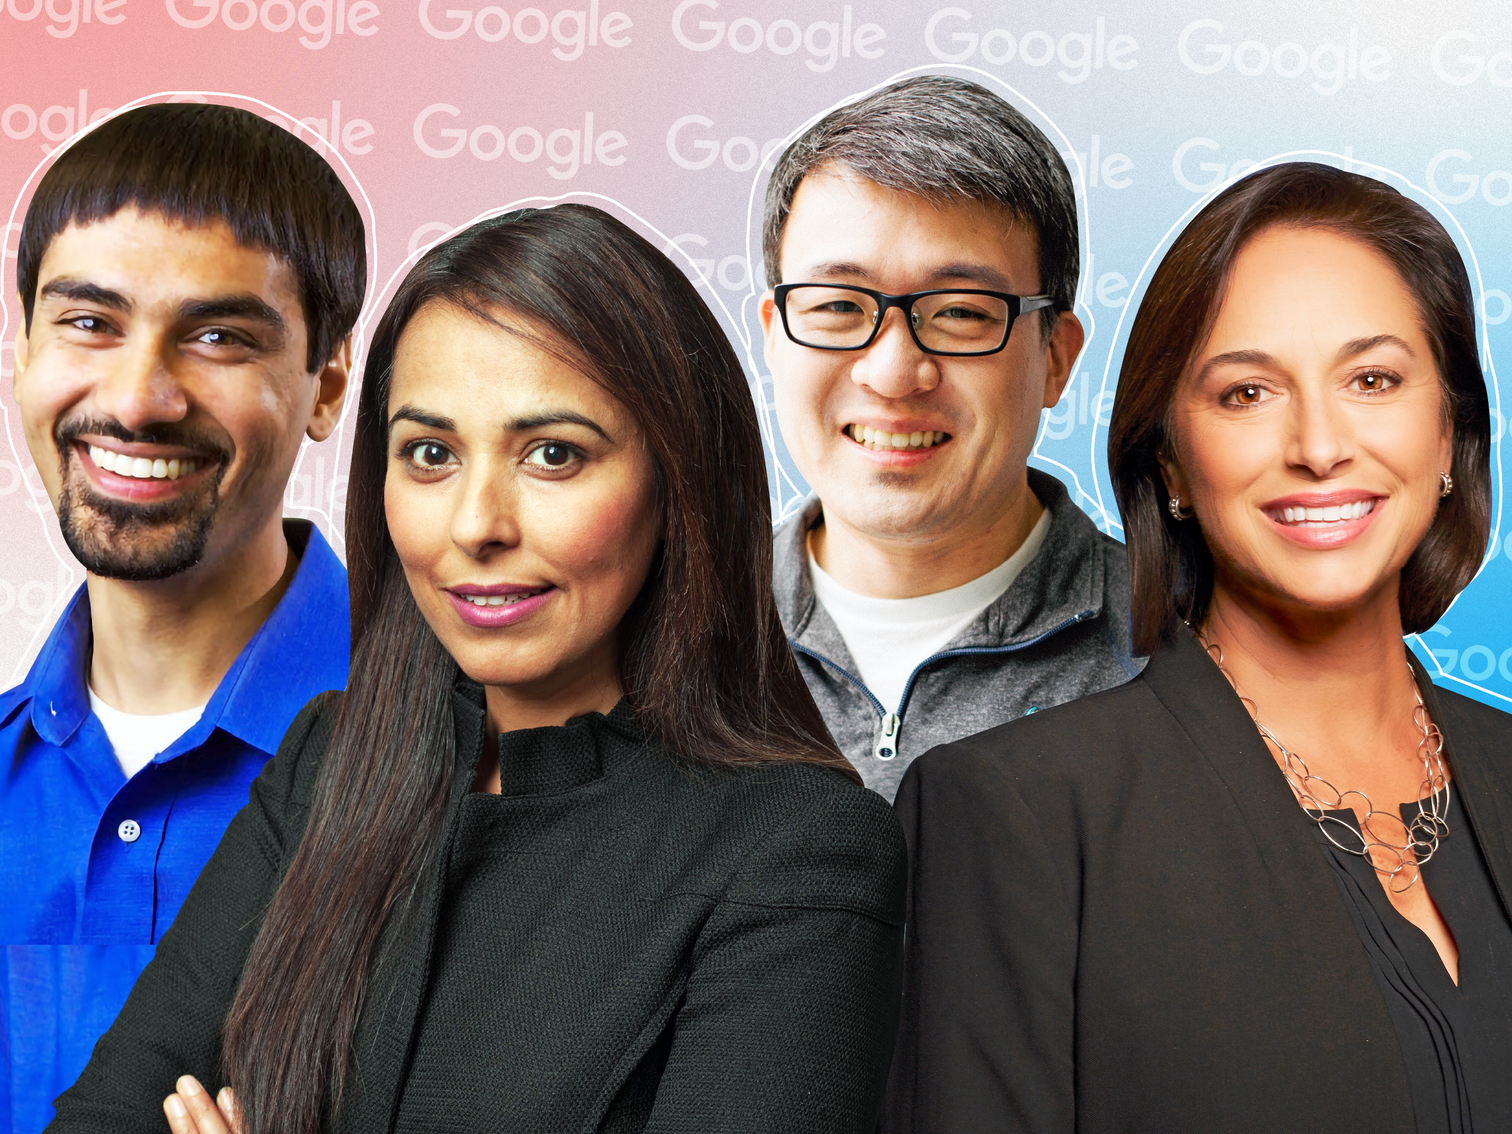 headshots of Shwetak Patel, Aashima Gupta, James Park, and Karen DeSalvo on top of a light blue and pink gradient background with subtle google logos tiled over it